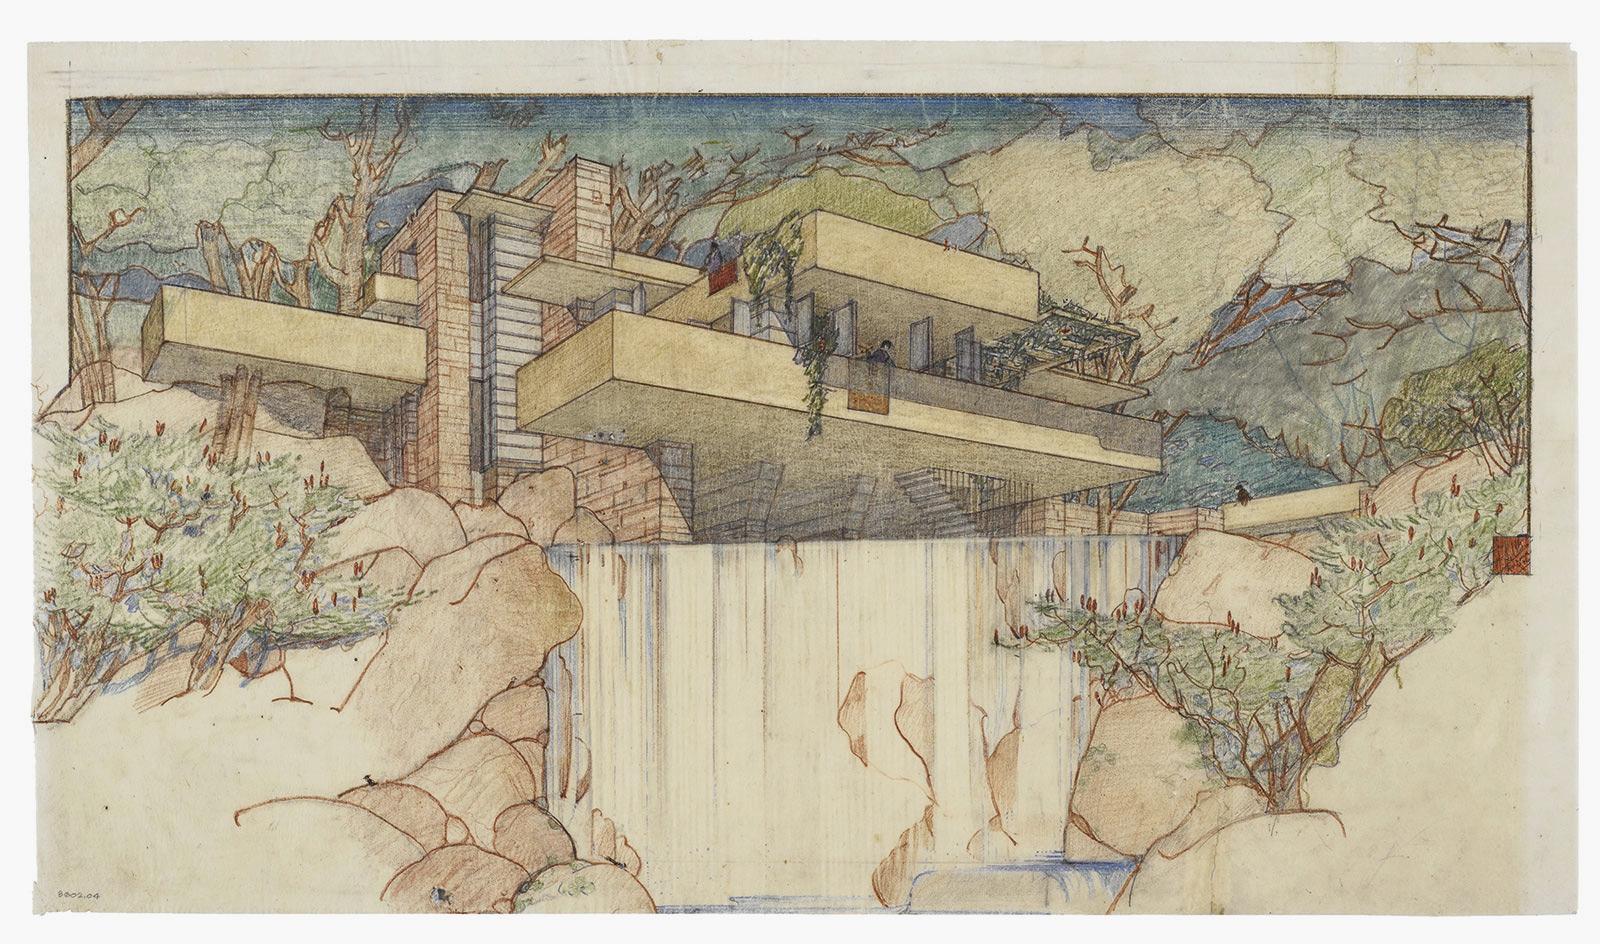 Frank Lloyd Wright exhibition at the Guggenheim, NY. Wallpaper*